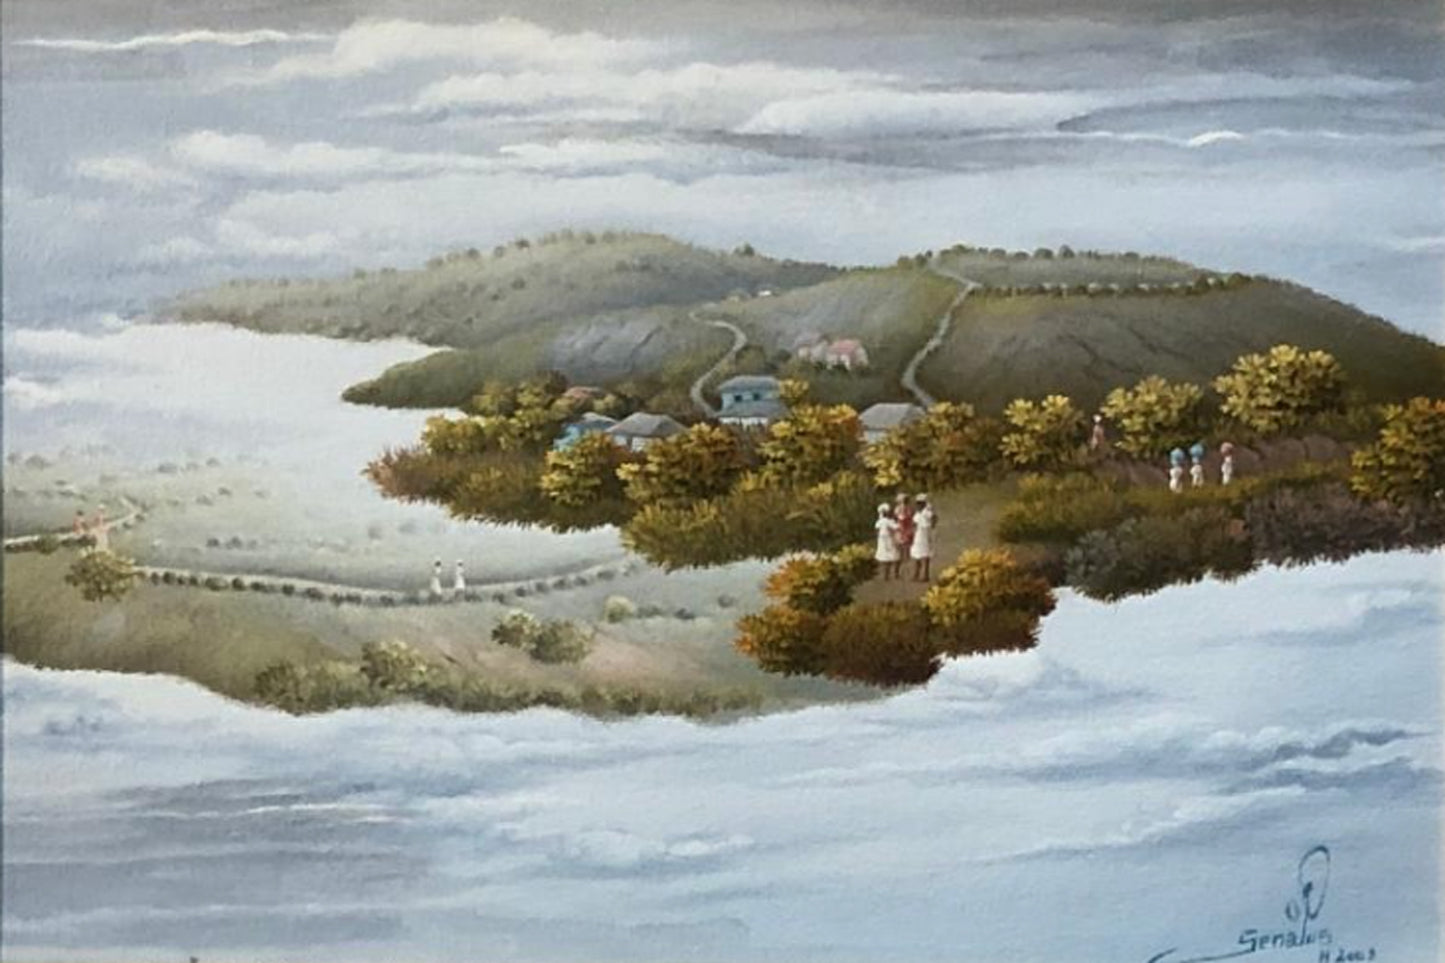 Jean-Louis Senatus 10"x12" Dreamy Landscape 2009 Oil on Canvas Painting #11-3-96GSN-NY